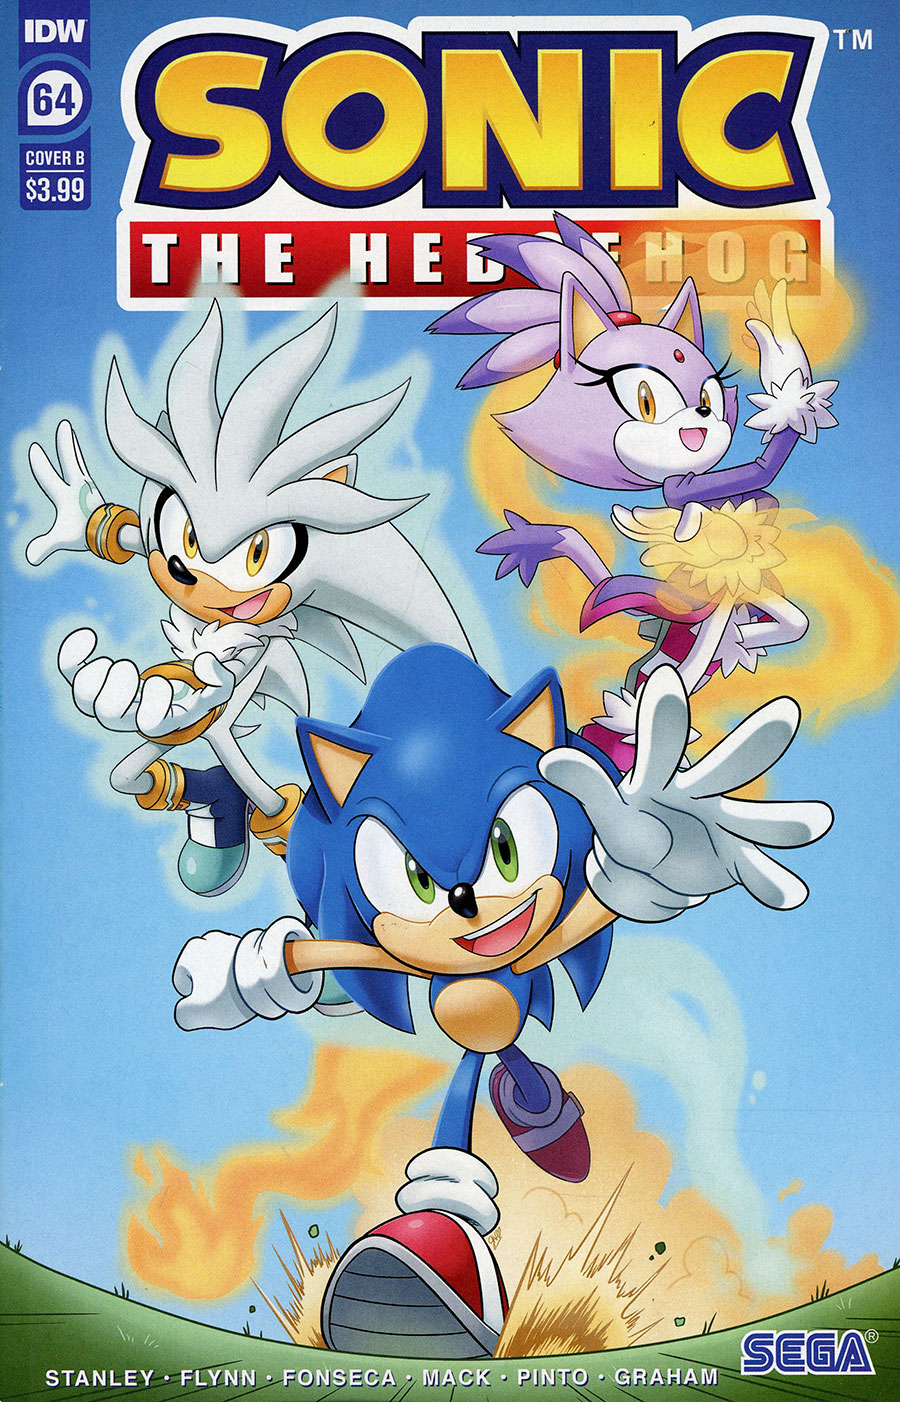 Sonic The Hedgehog Vol 3 #64 Cover B Variant Jennifer Hernandez Cover